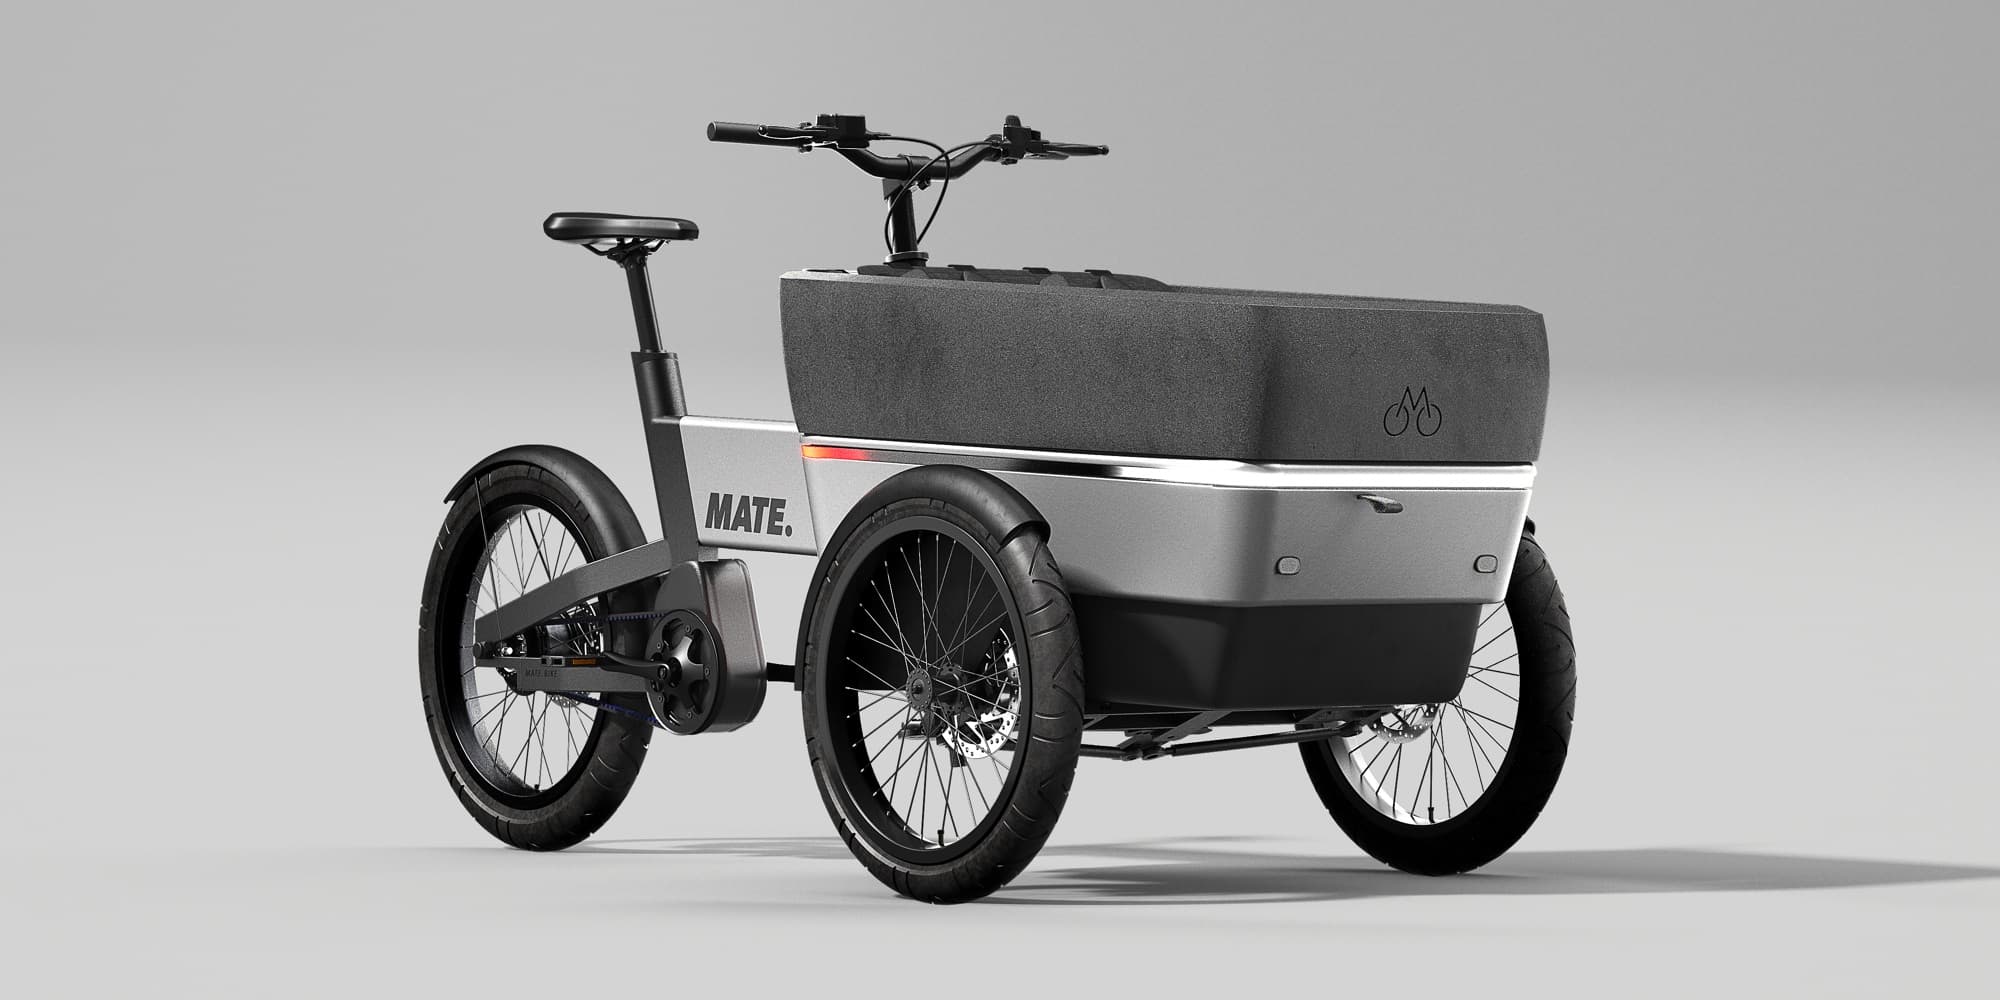 https://electrek.co/wp-content/uploads/sites/3/2022/12/MATE-SUV-header-cargo-e-bike.jpg?quality=82&strip=all